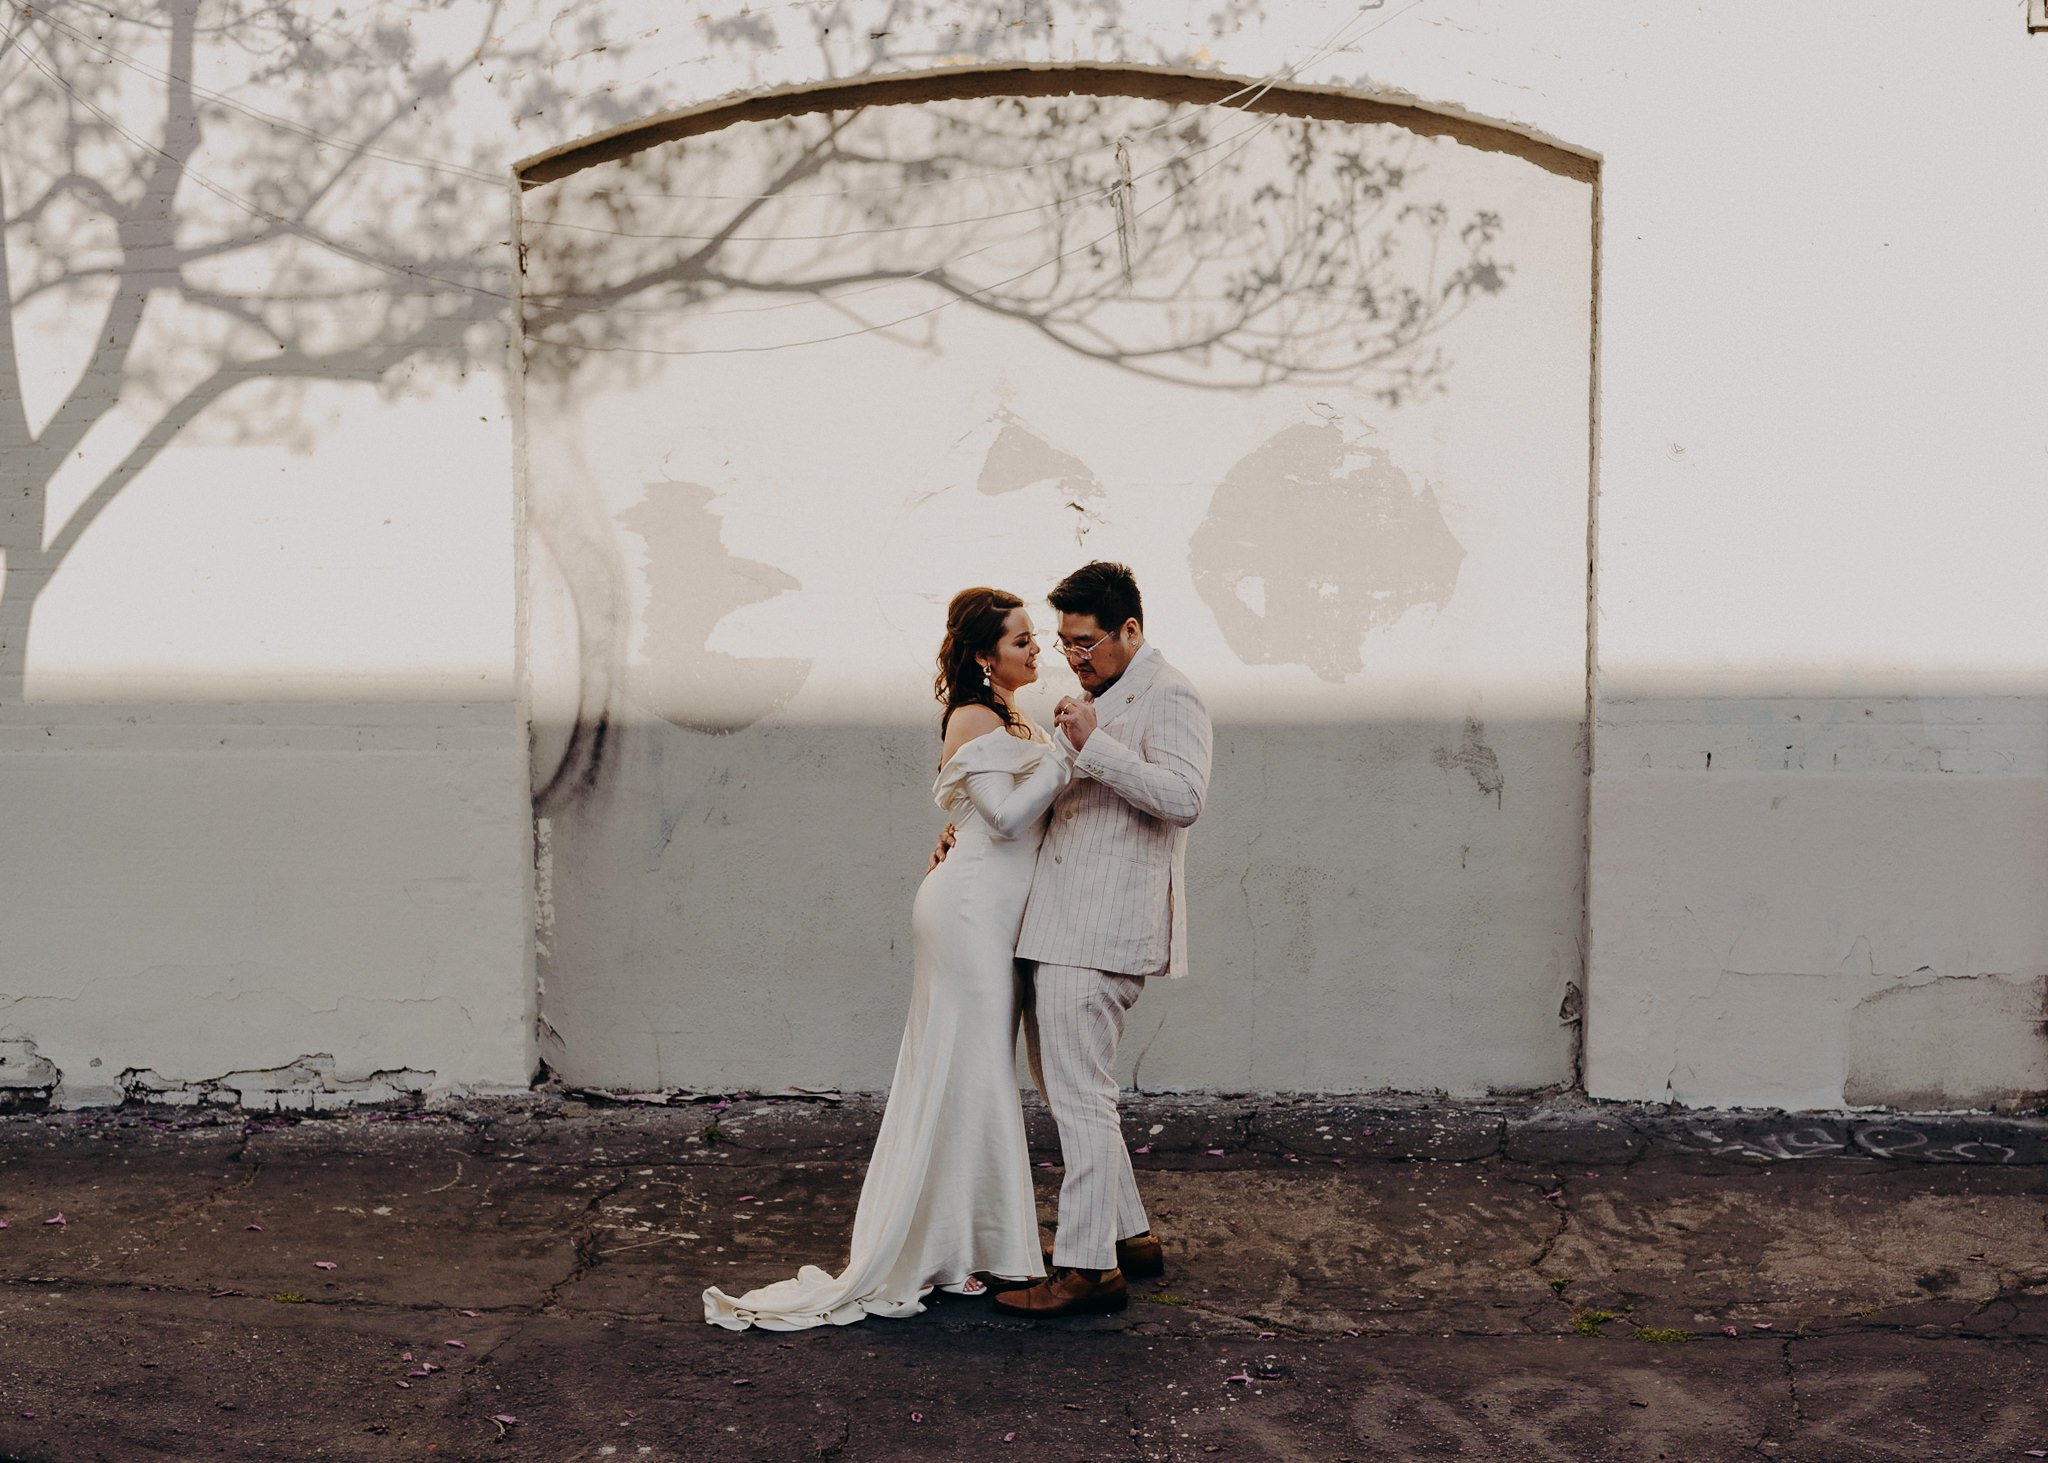 lgbtqia+ wedding photographers in los angeles - city elopement - itlaphoto.com-23.jpg